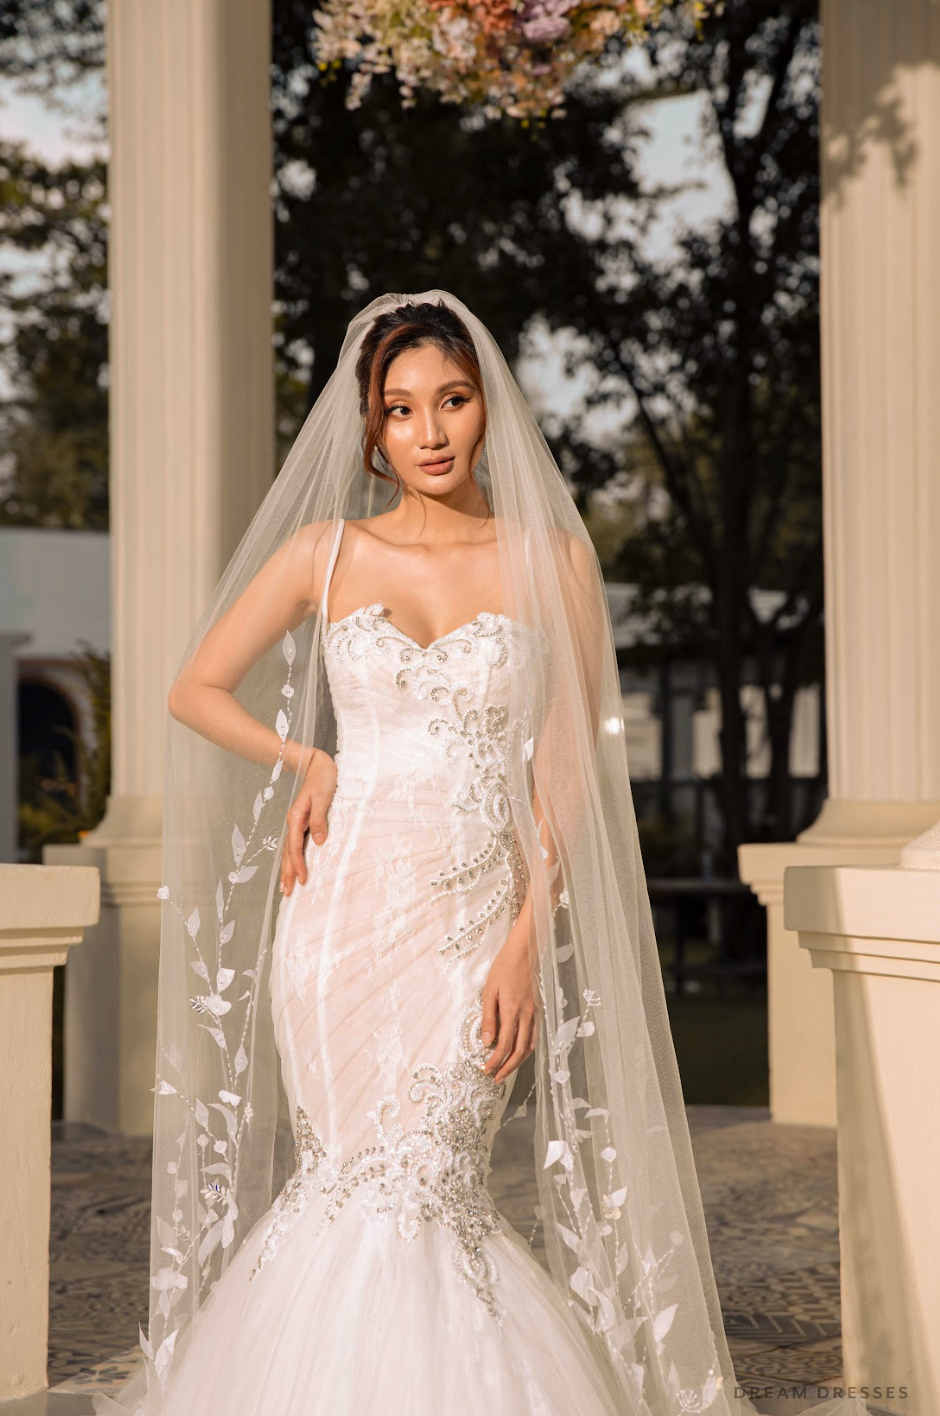 3D Embellished Wedding Veil (#KEISHA)